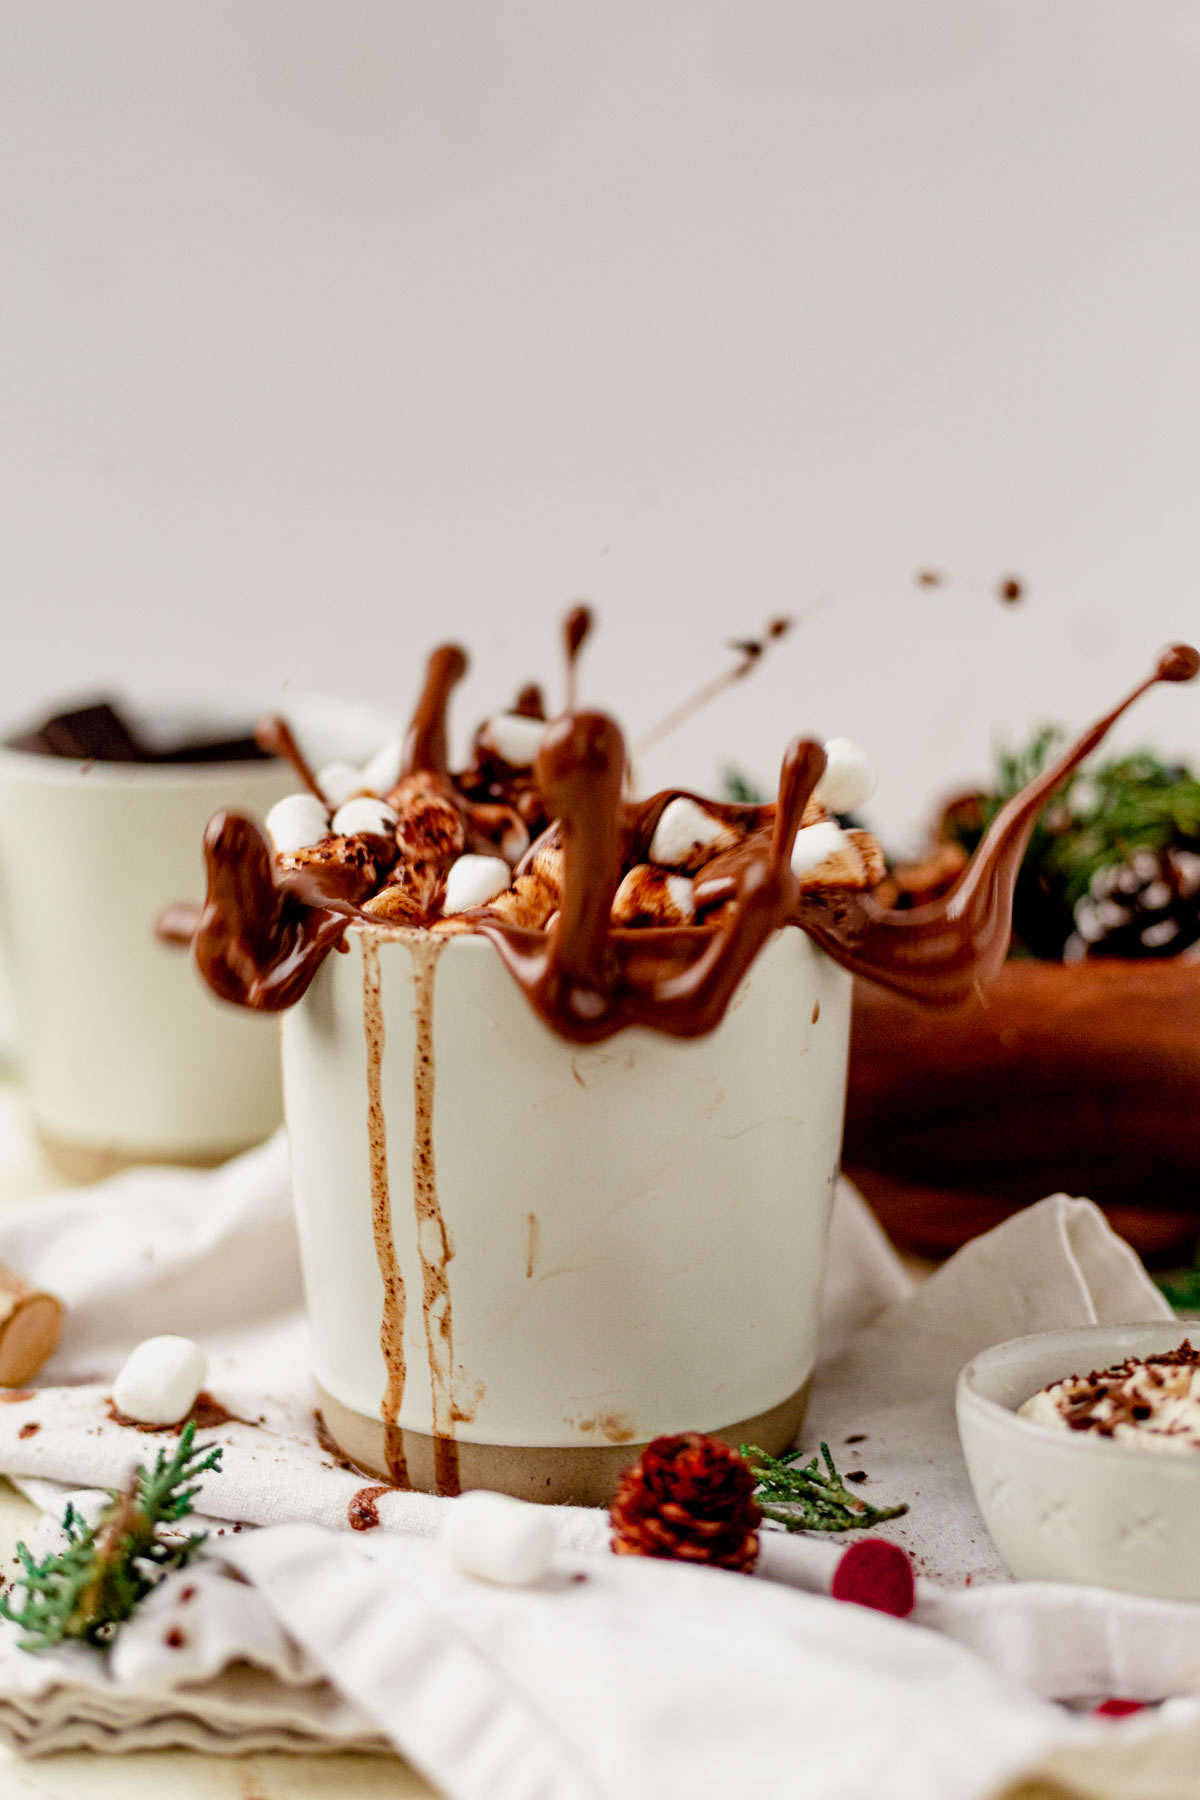 marshmallows splashing into a mug of vegan hot chocolate